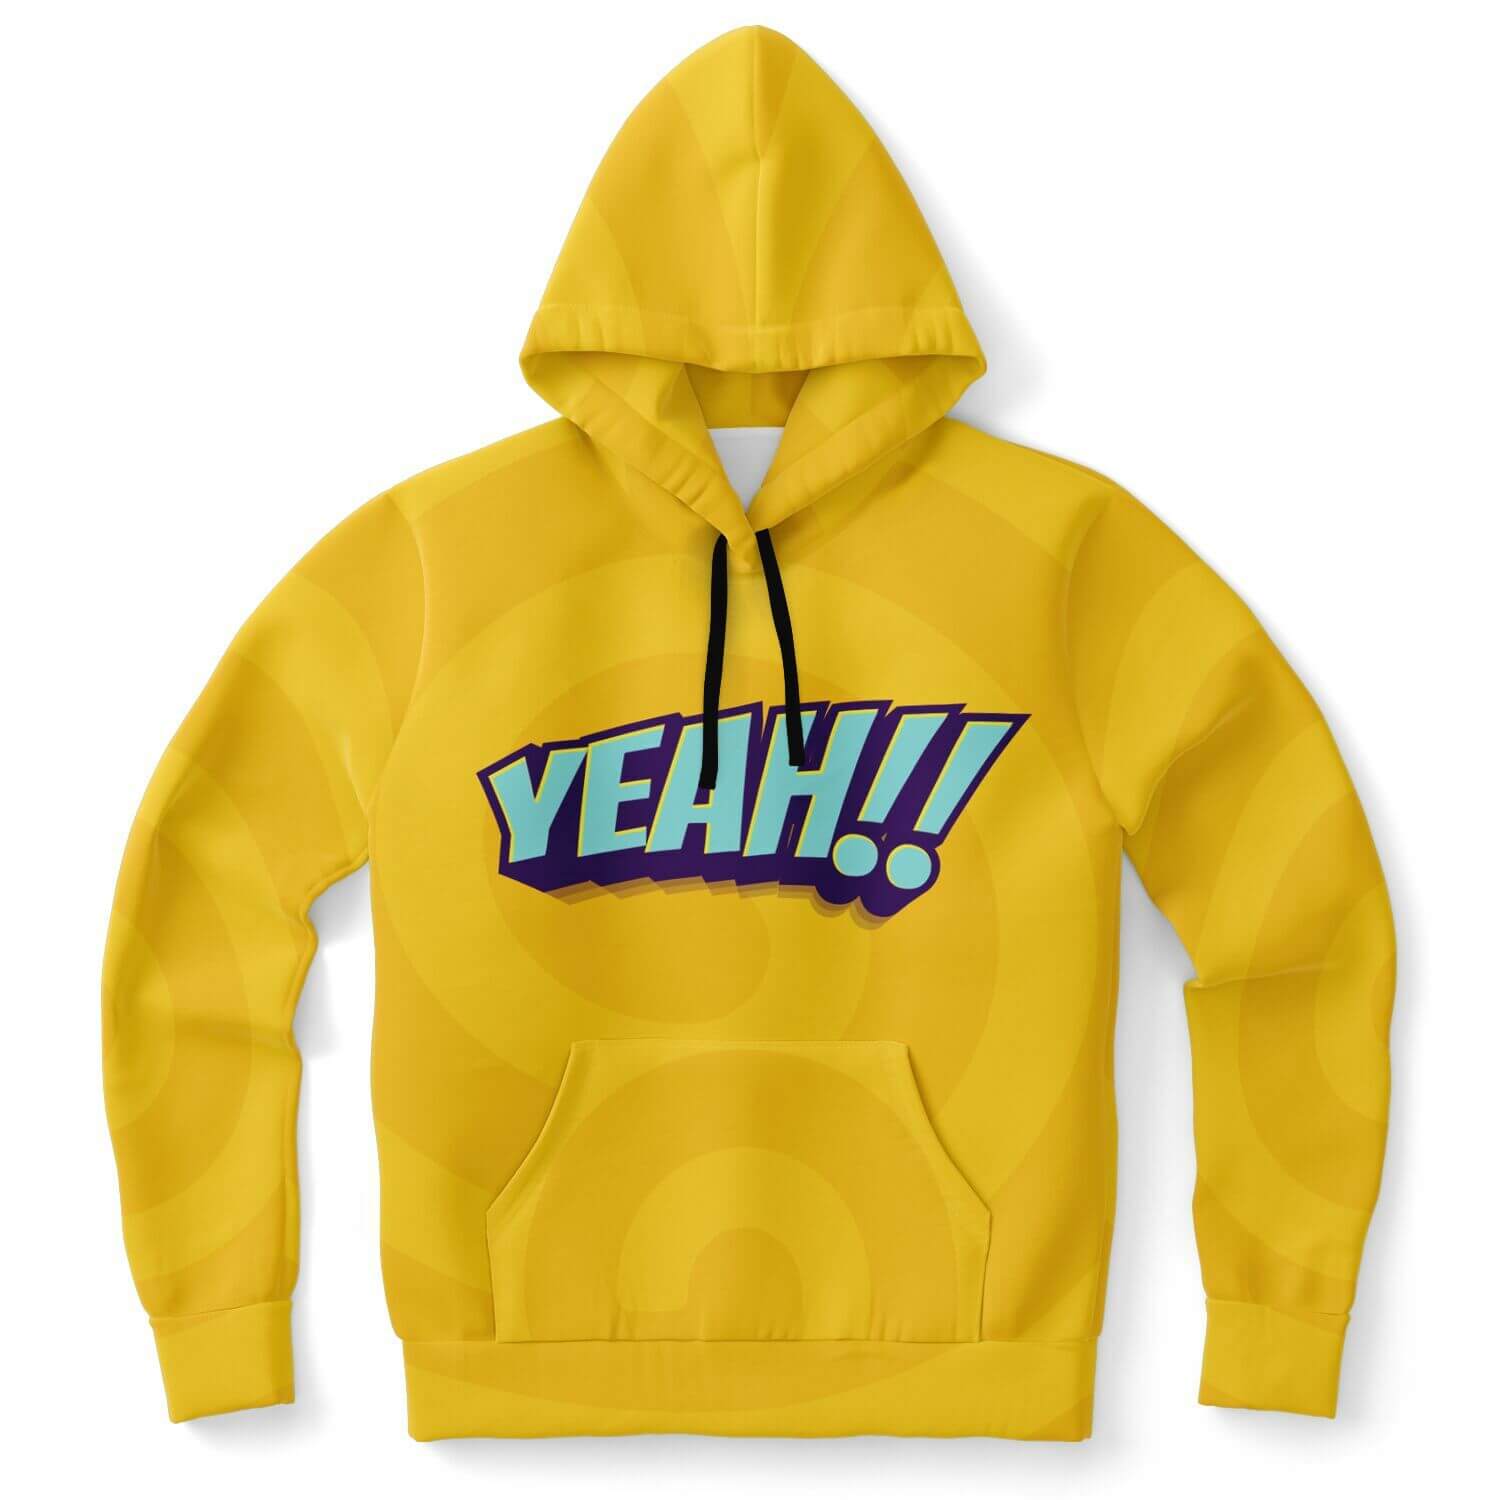 YEAH! Yellow Hoodie | Pop Art HD